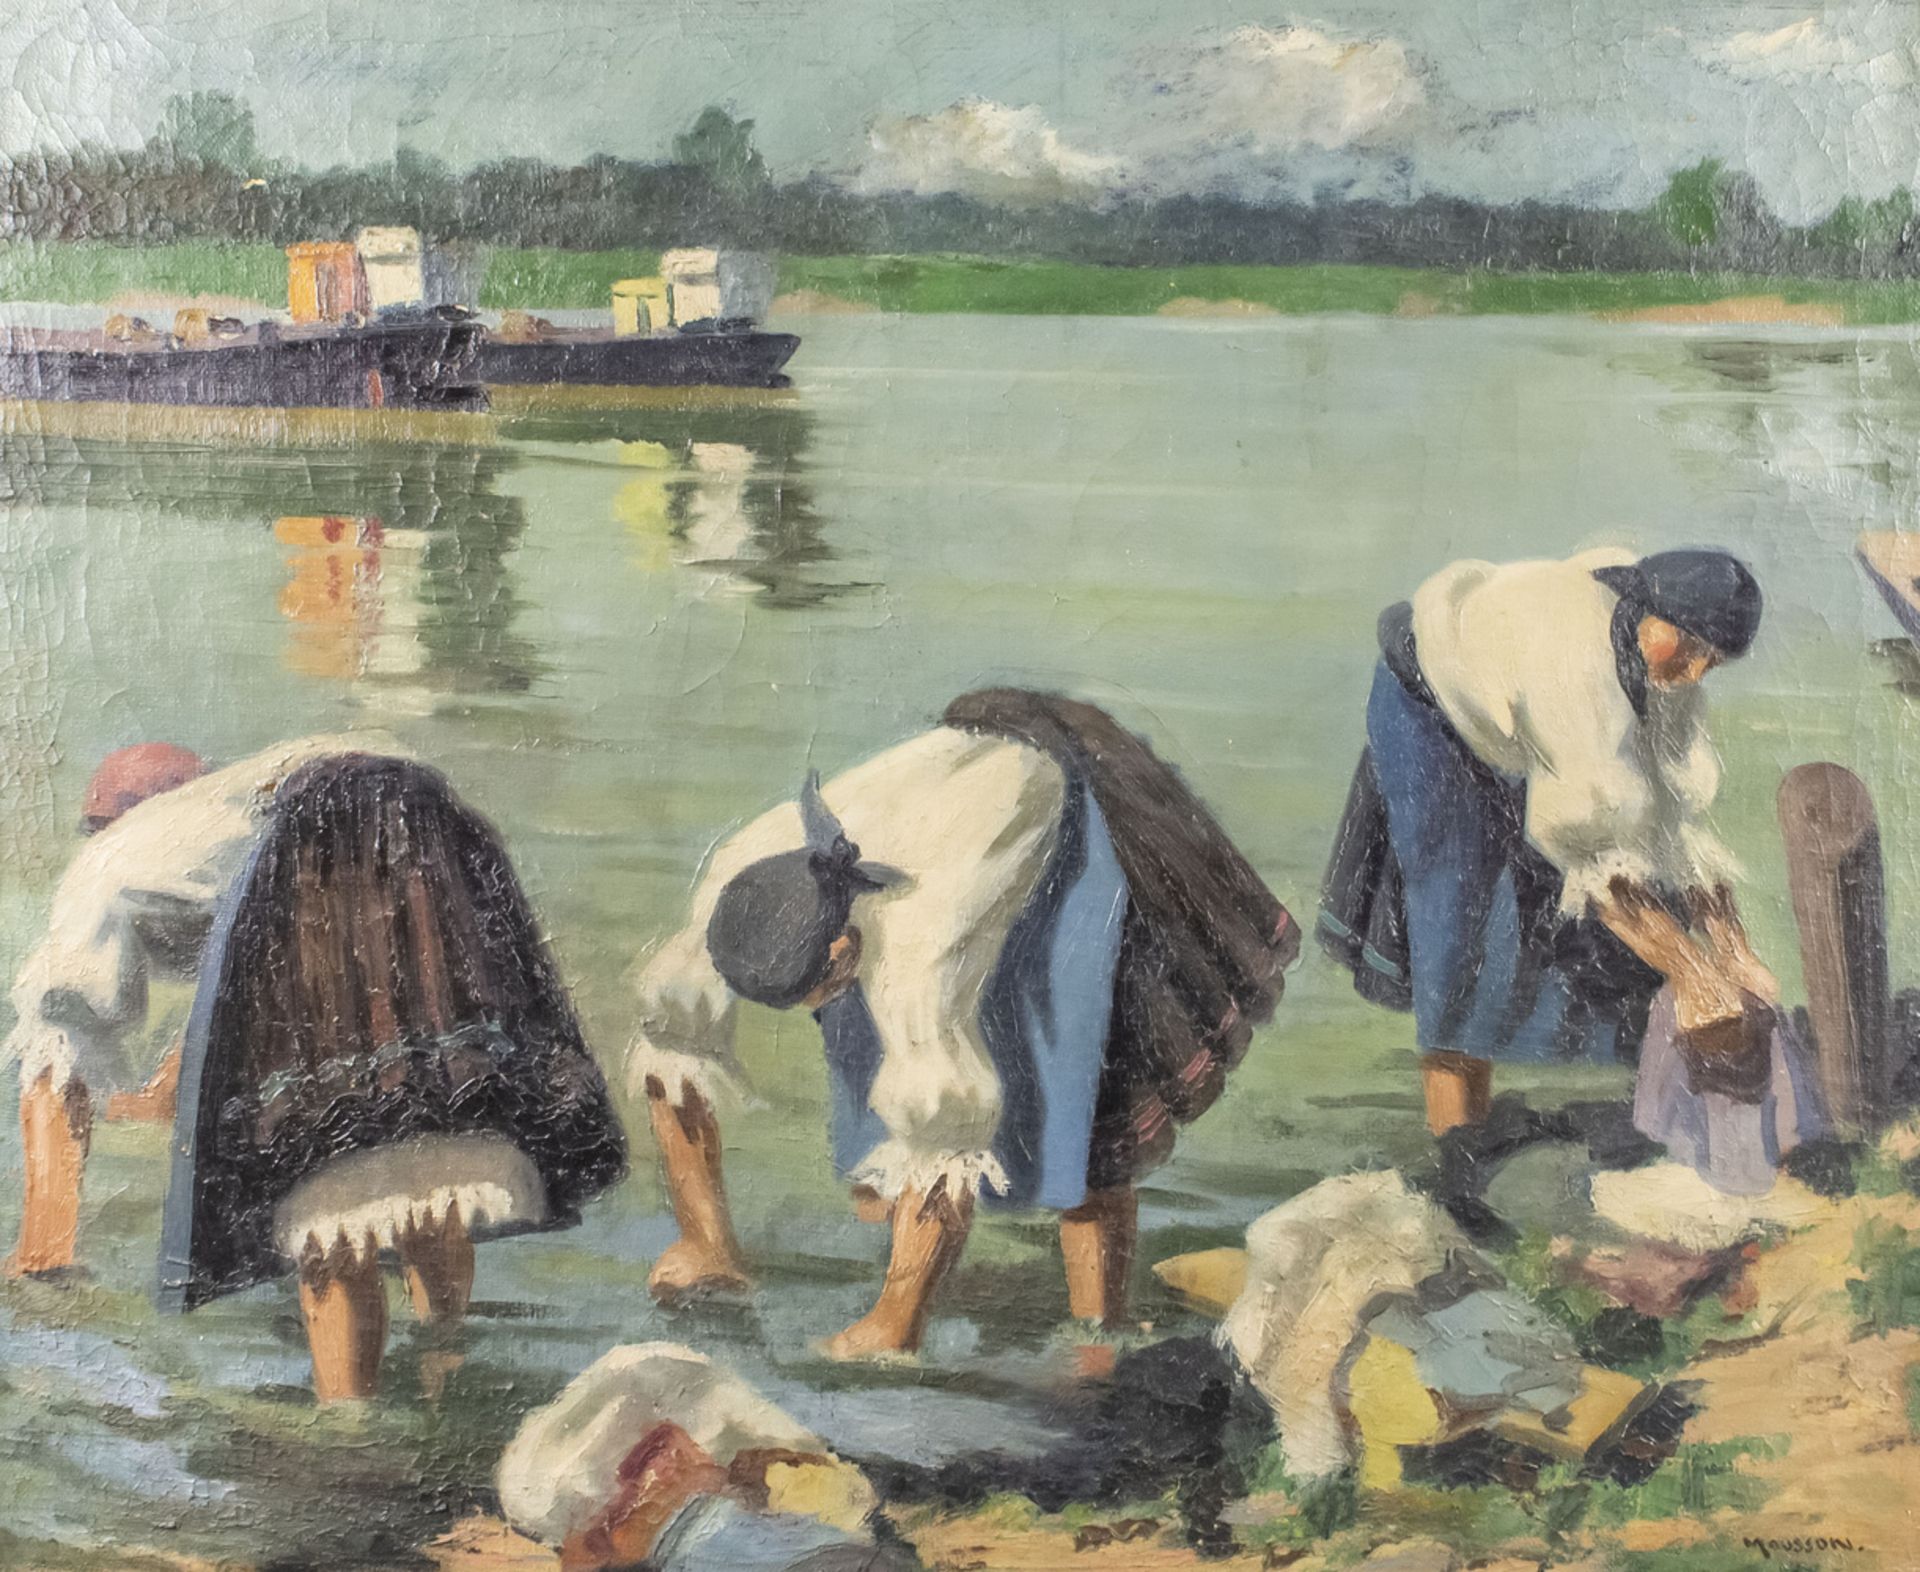 Künstler des 19./20. Jh., 'Wäscherinnen am Fluss' / 'Washerwoman at the river'